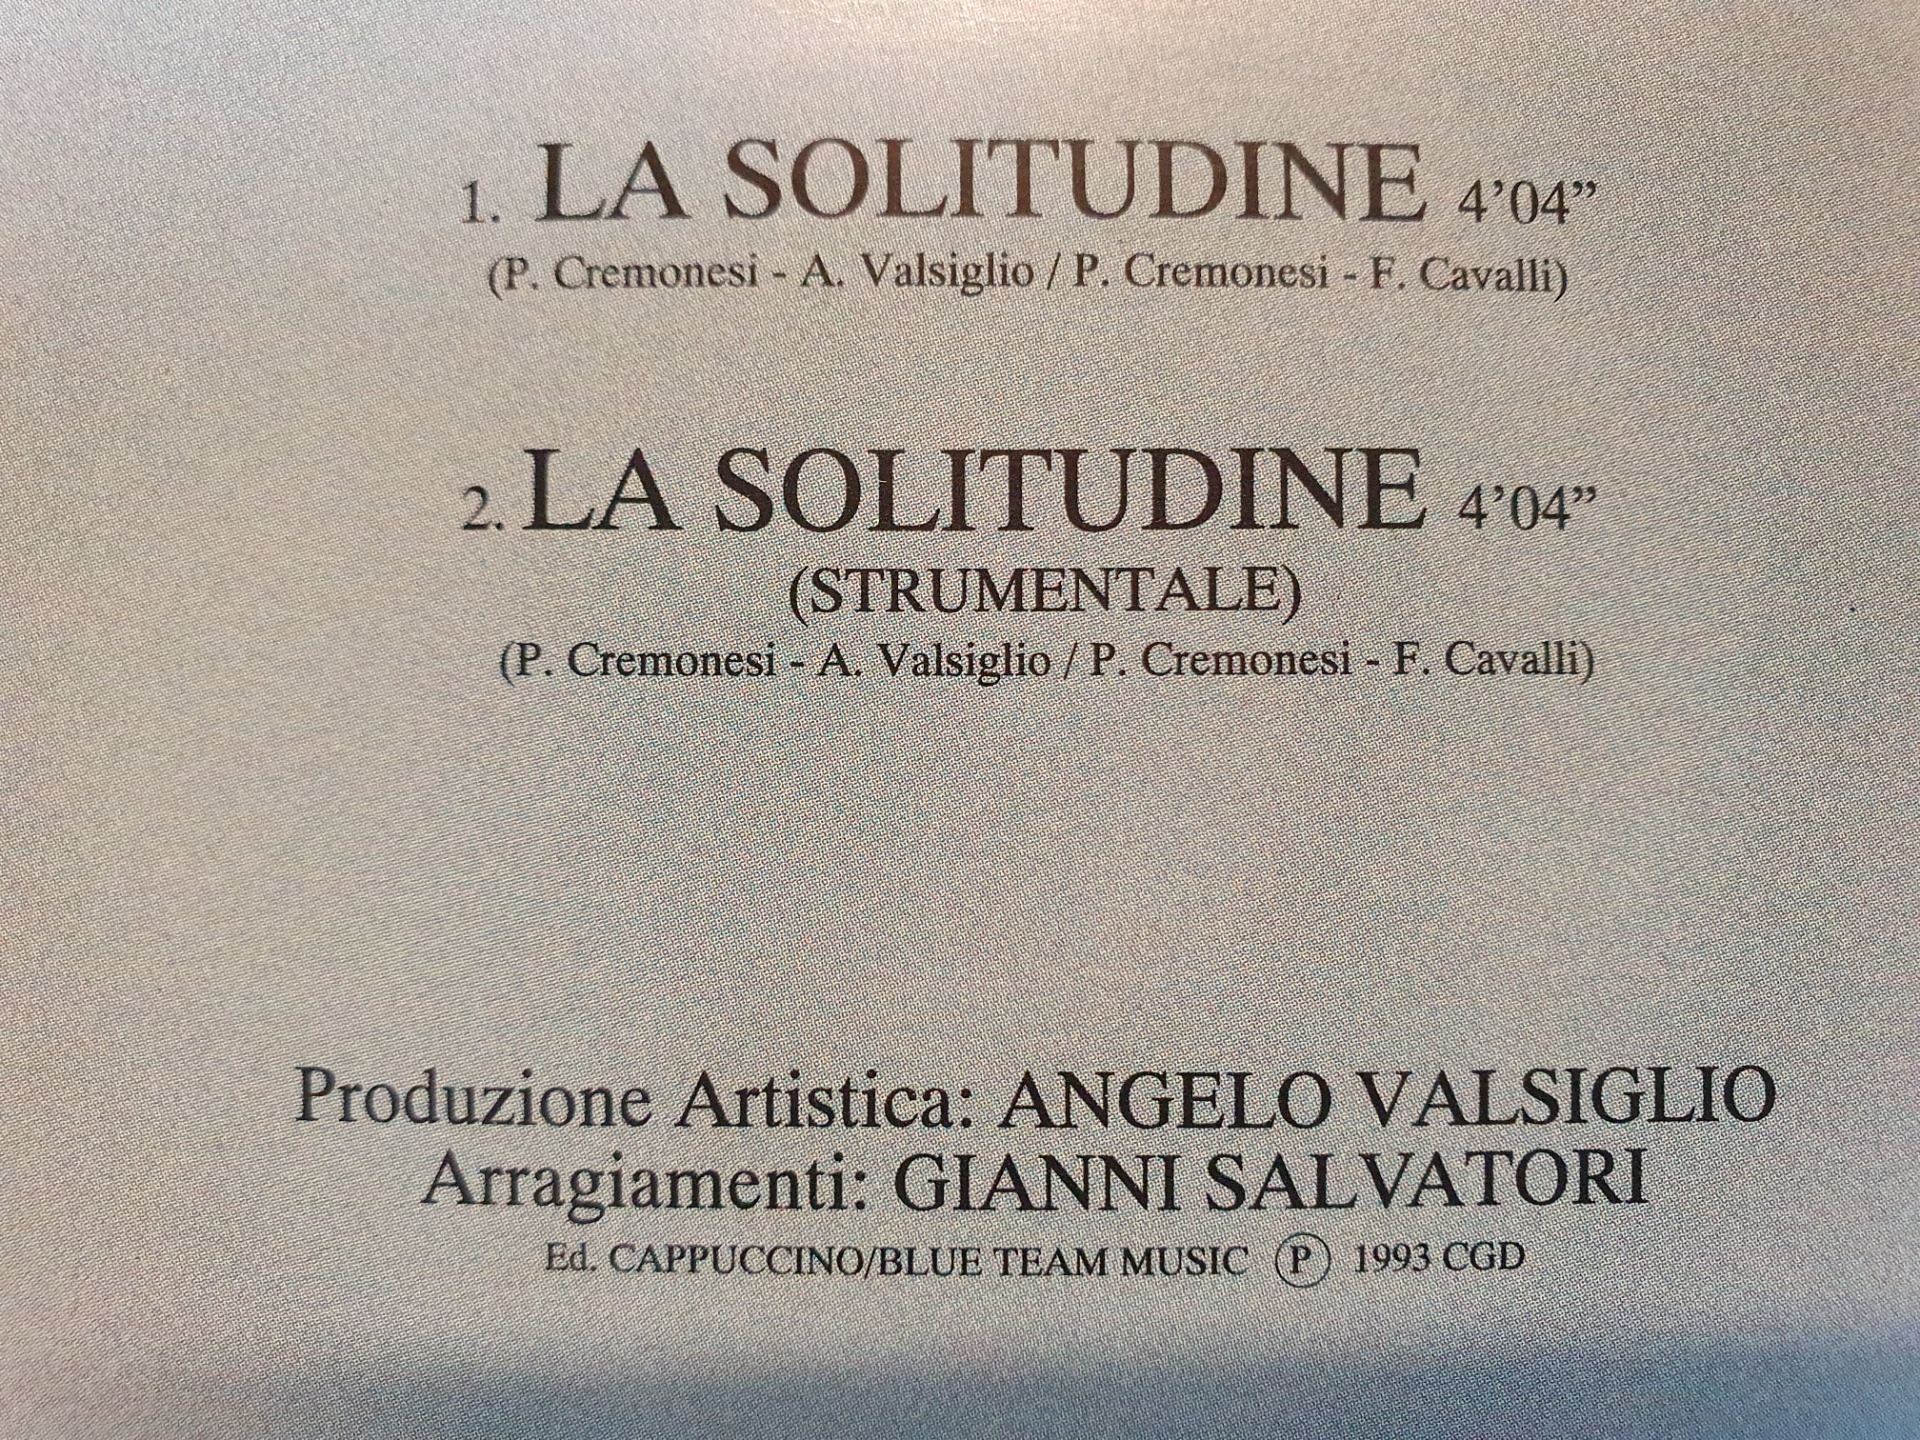 Laura Pausini, La Solitudine, CD (Single), laura pausini cd